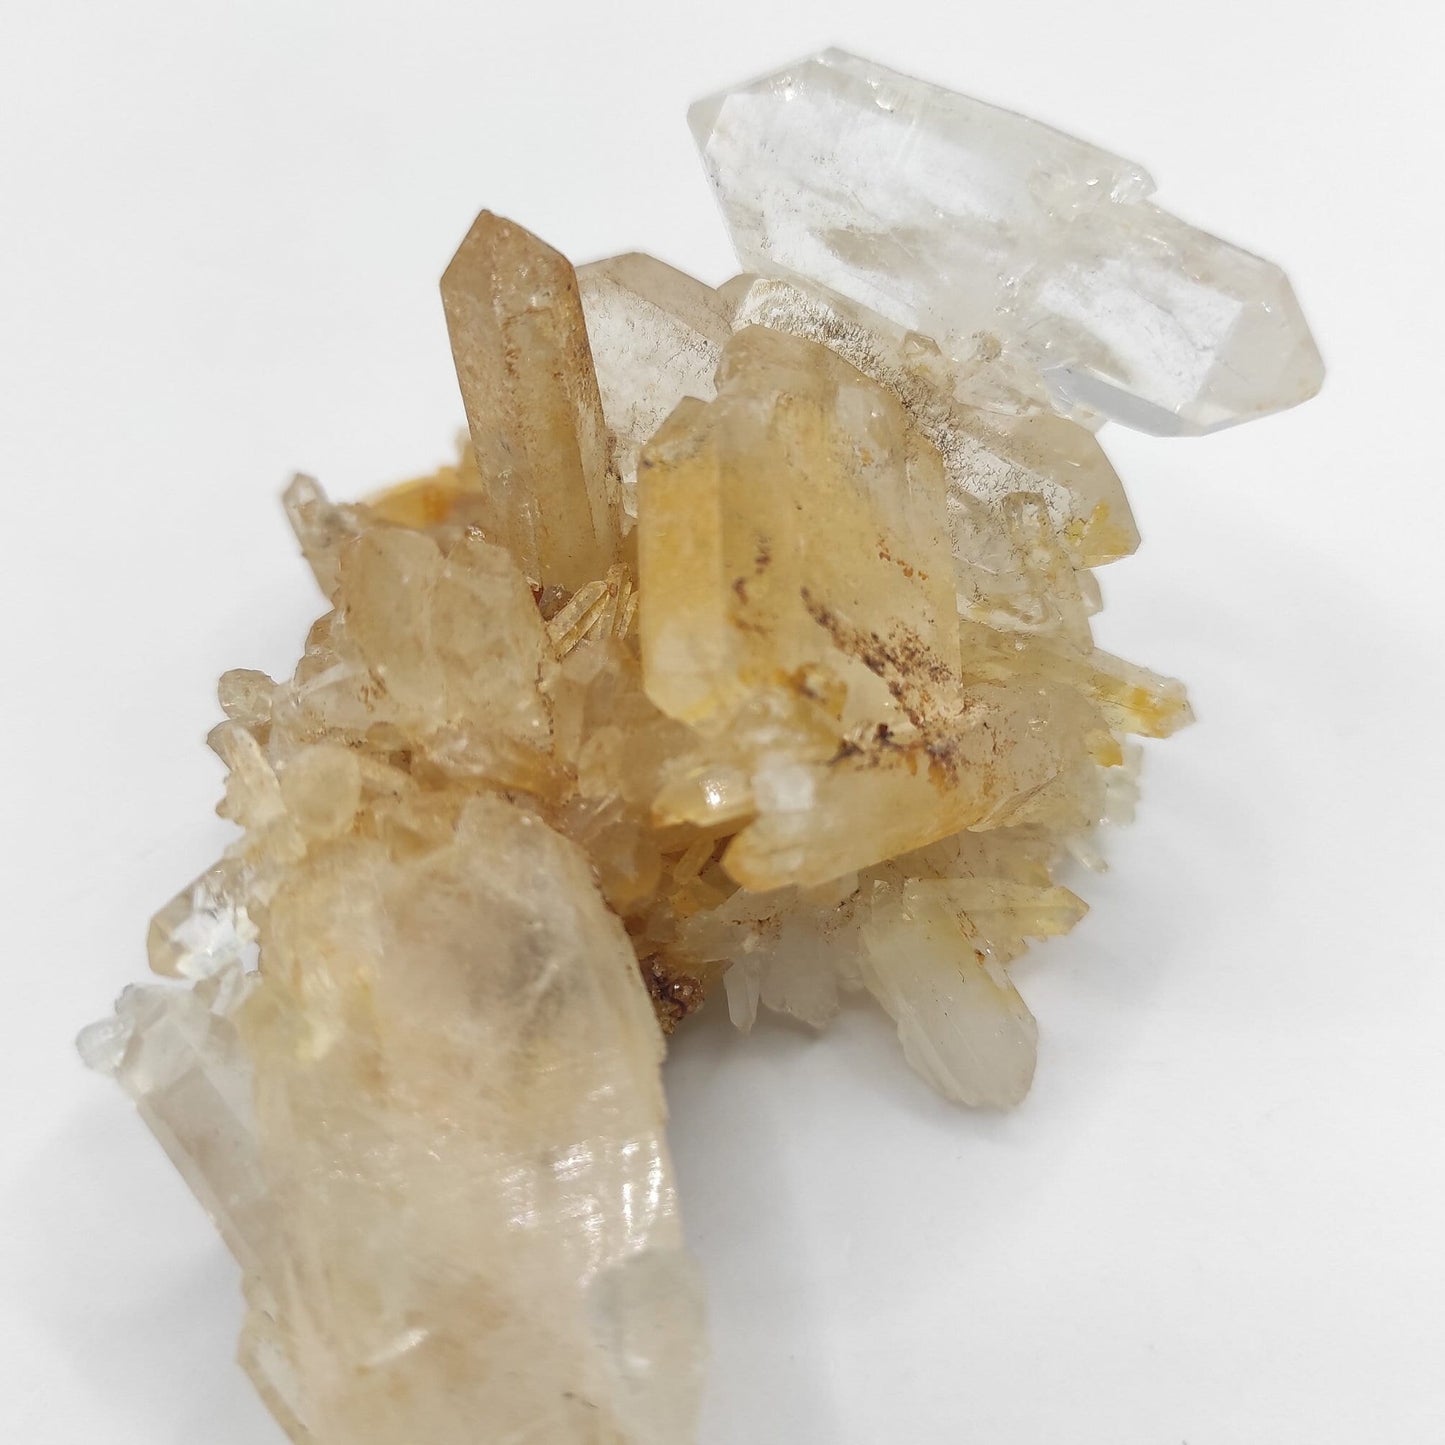 97g Natural Quartz Crystal Cluster - Clear Quartz from Pakistan - Yellow Quartz Specimen - Balochistan, Pakistan Mineral Specimens